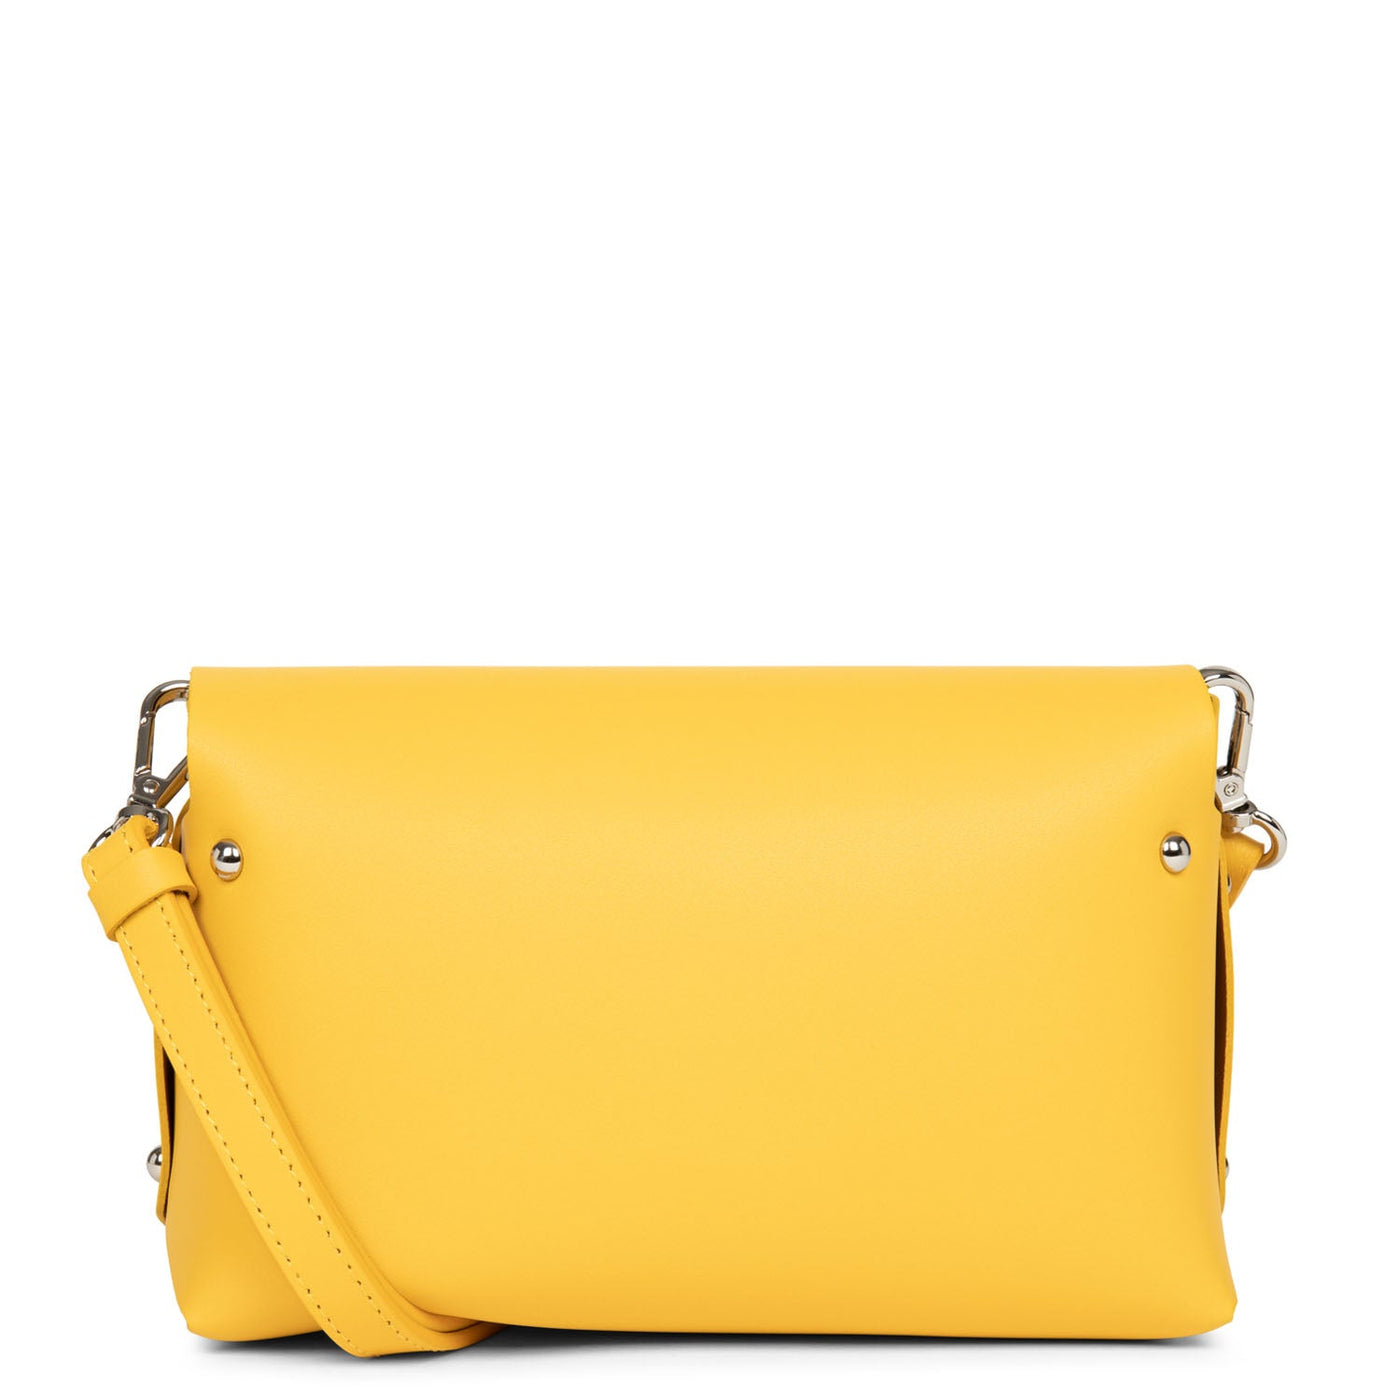 crossbody bag - city flore #couleur_jaune-in-camel